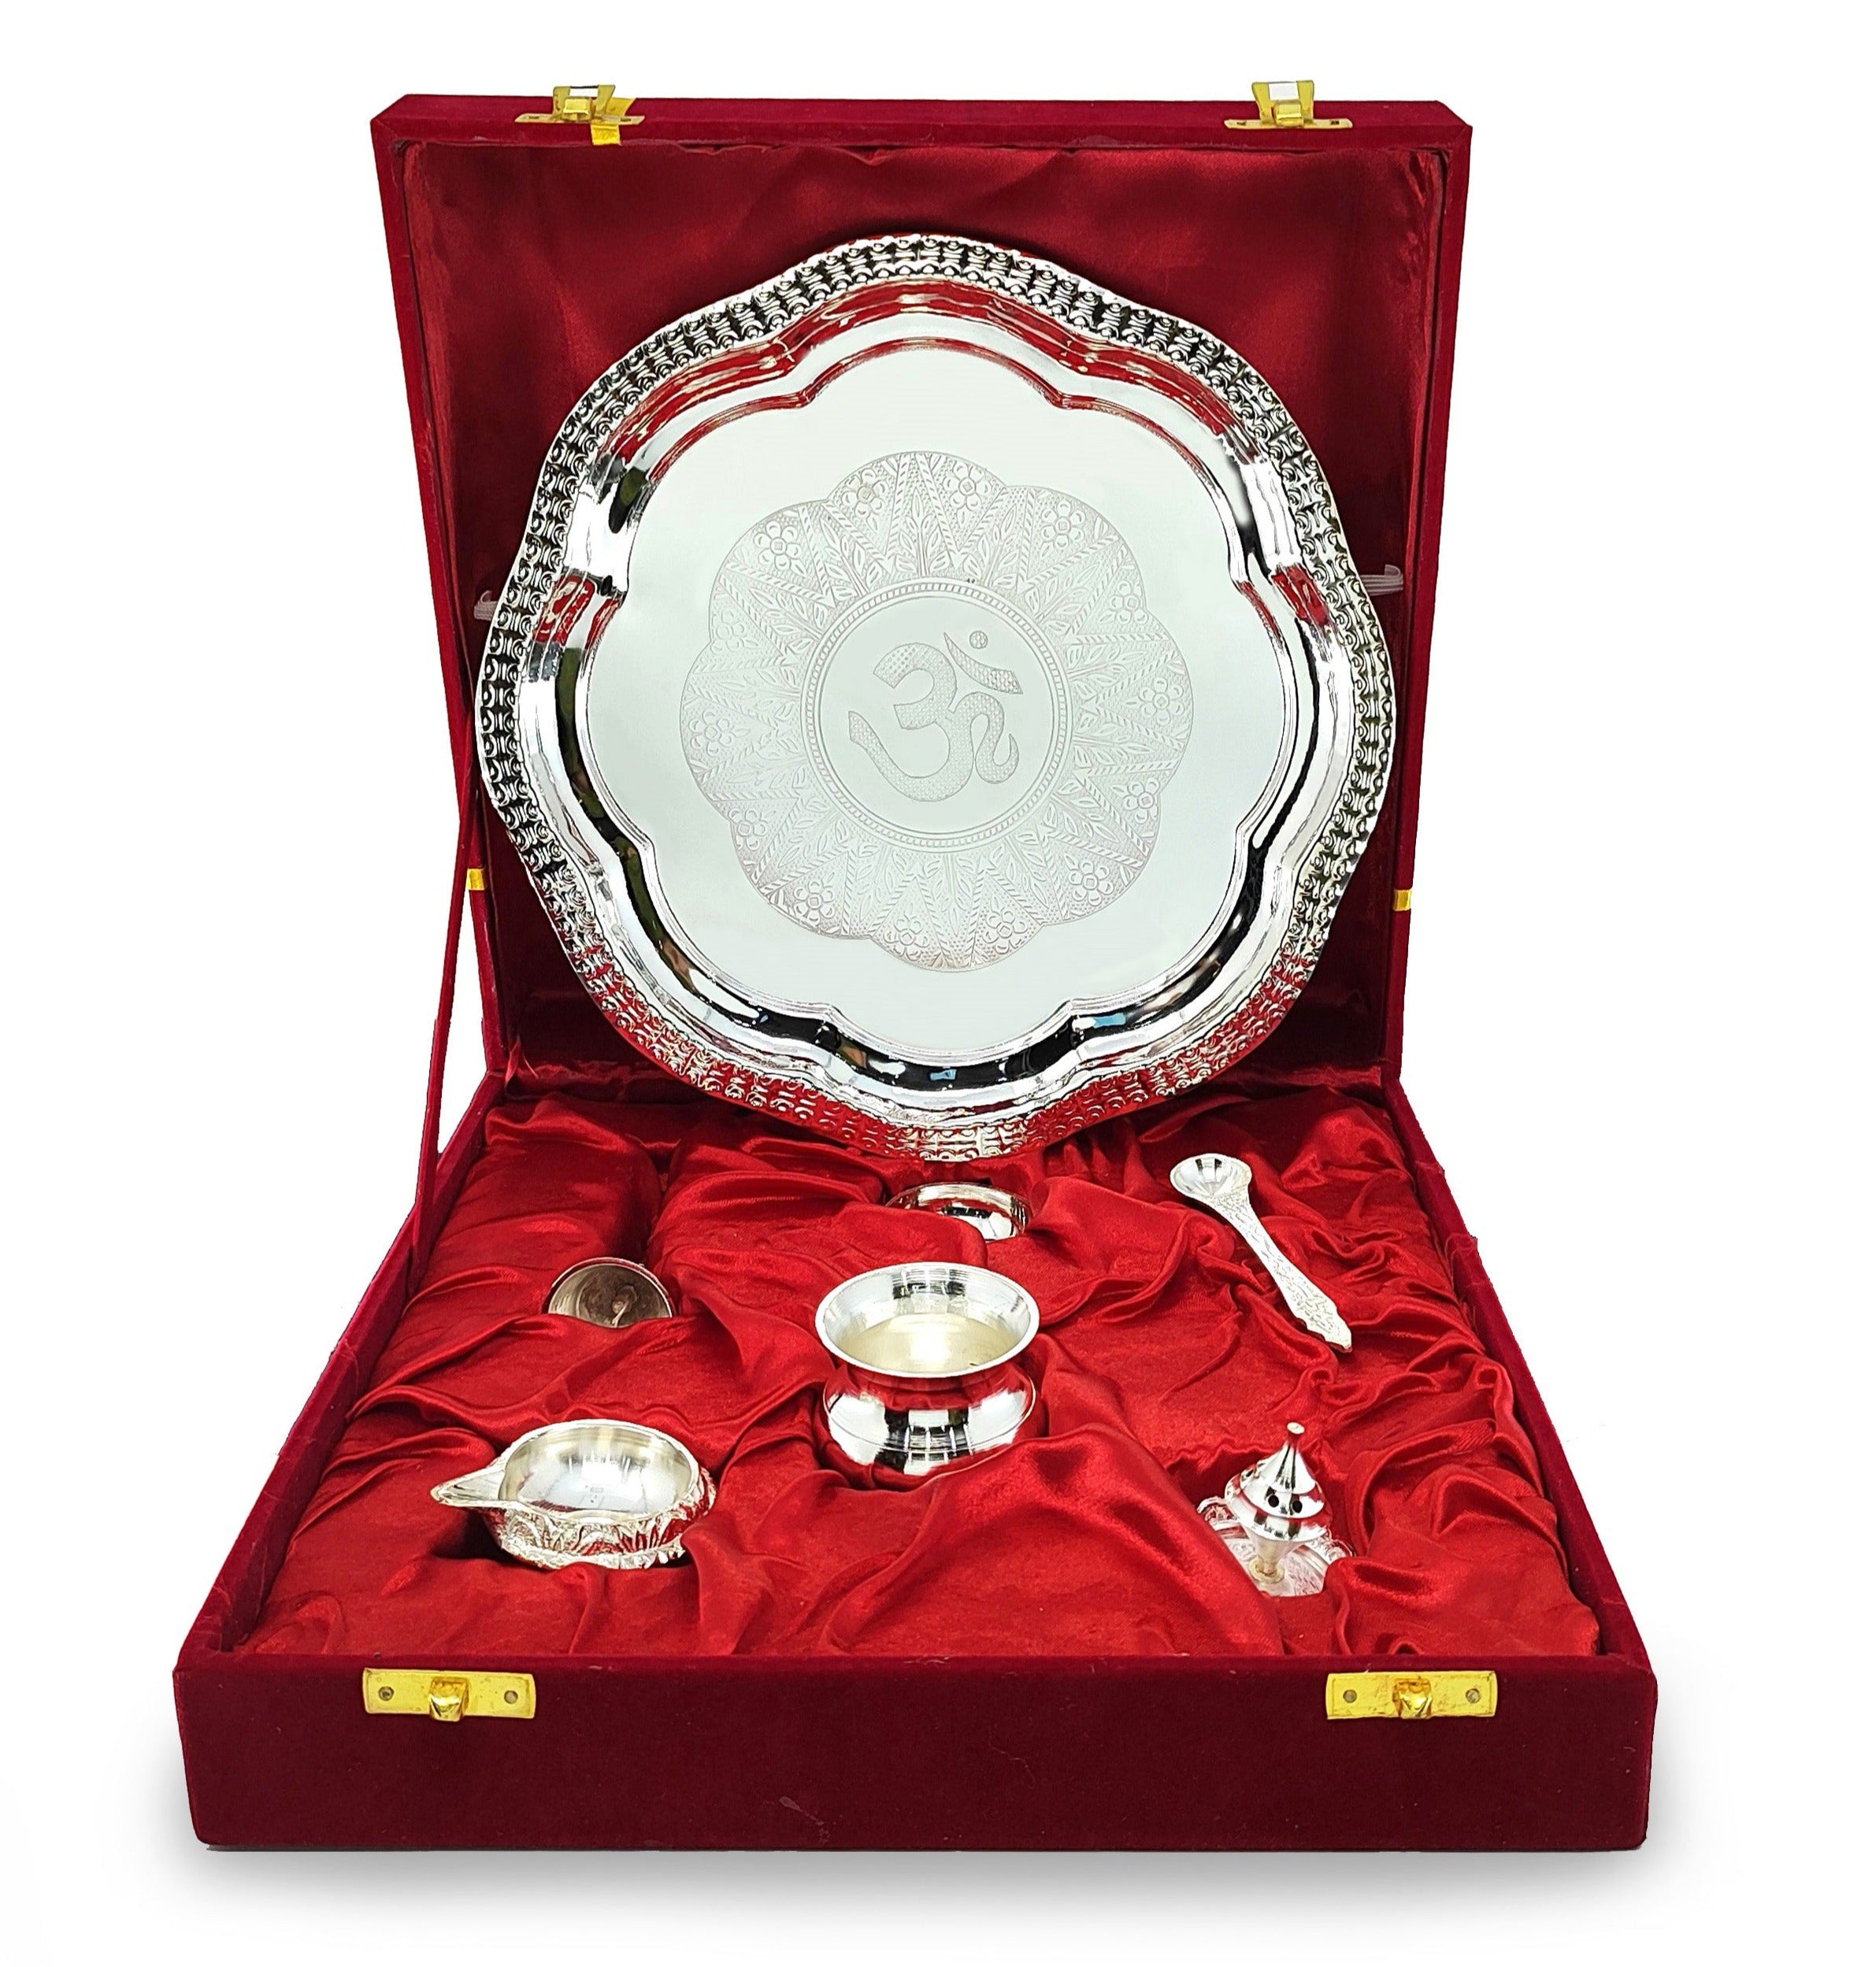 BENGALEN Pooja Thali Set Silver Plated with Gift Box 22 cm Designed Puja Plate Kalash Ghanti Bowl Spoon Dhup Dan Kuber Diya for Housewarming Diwali Wedding Gift Items